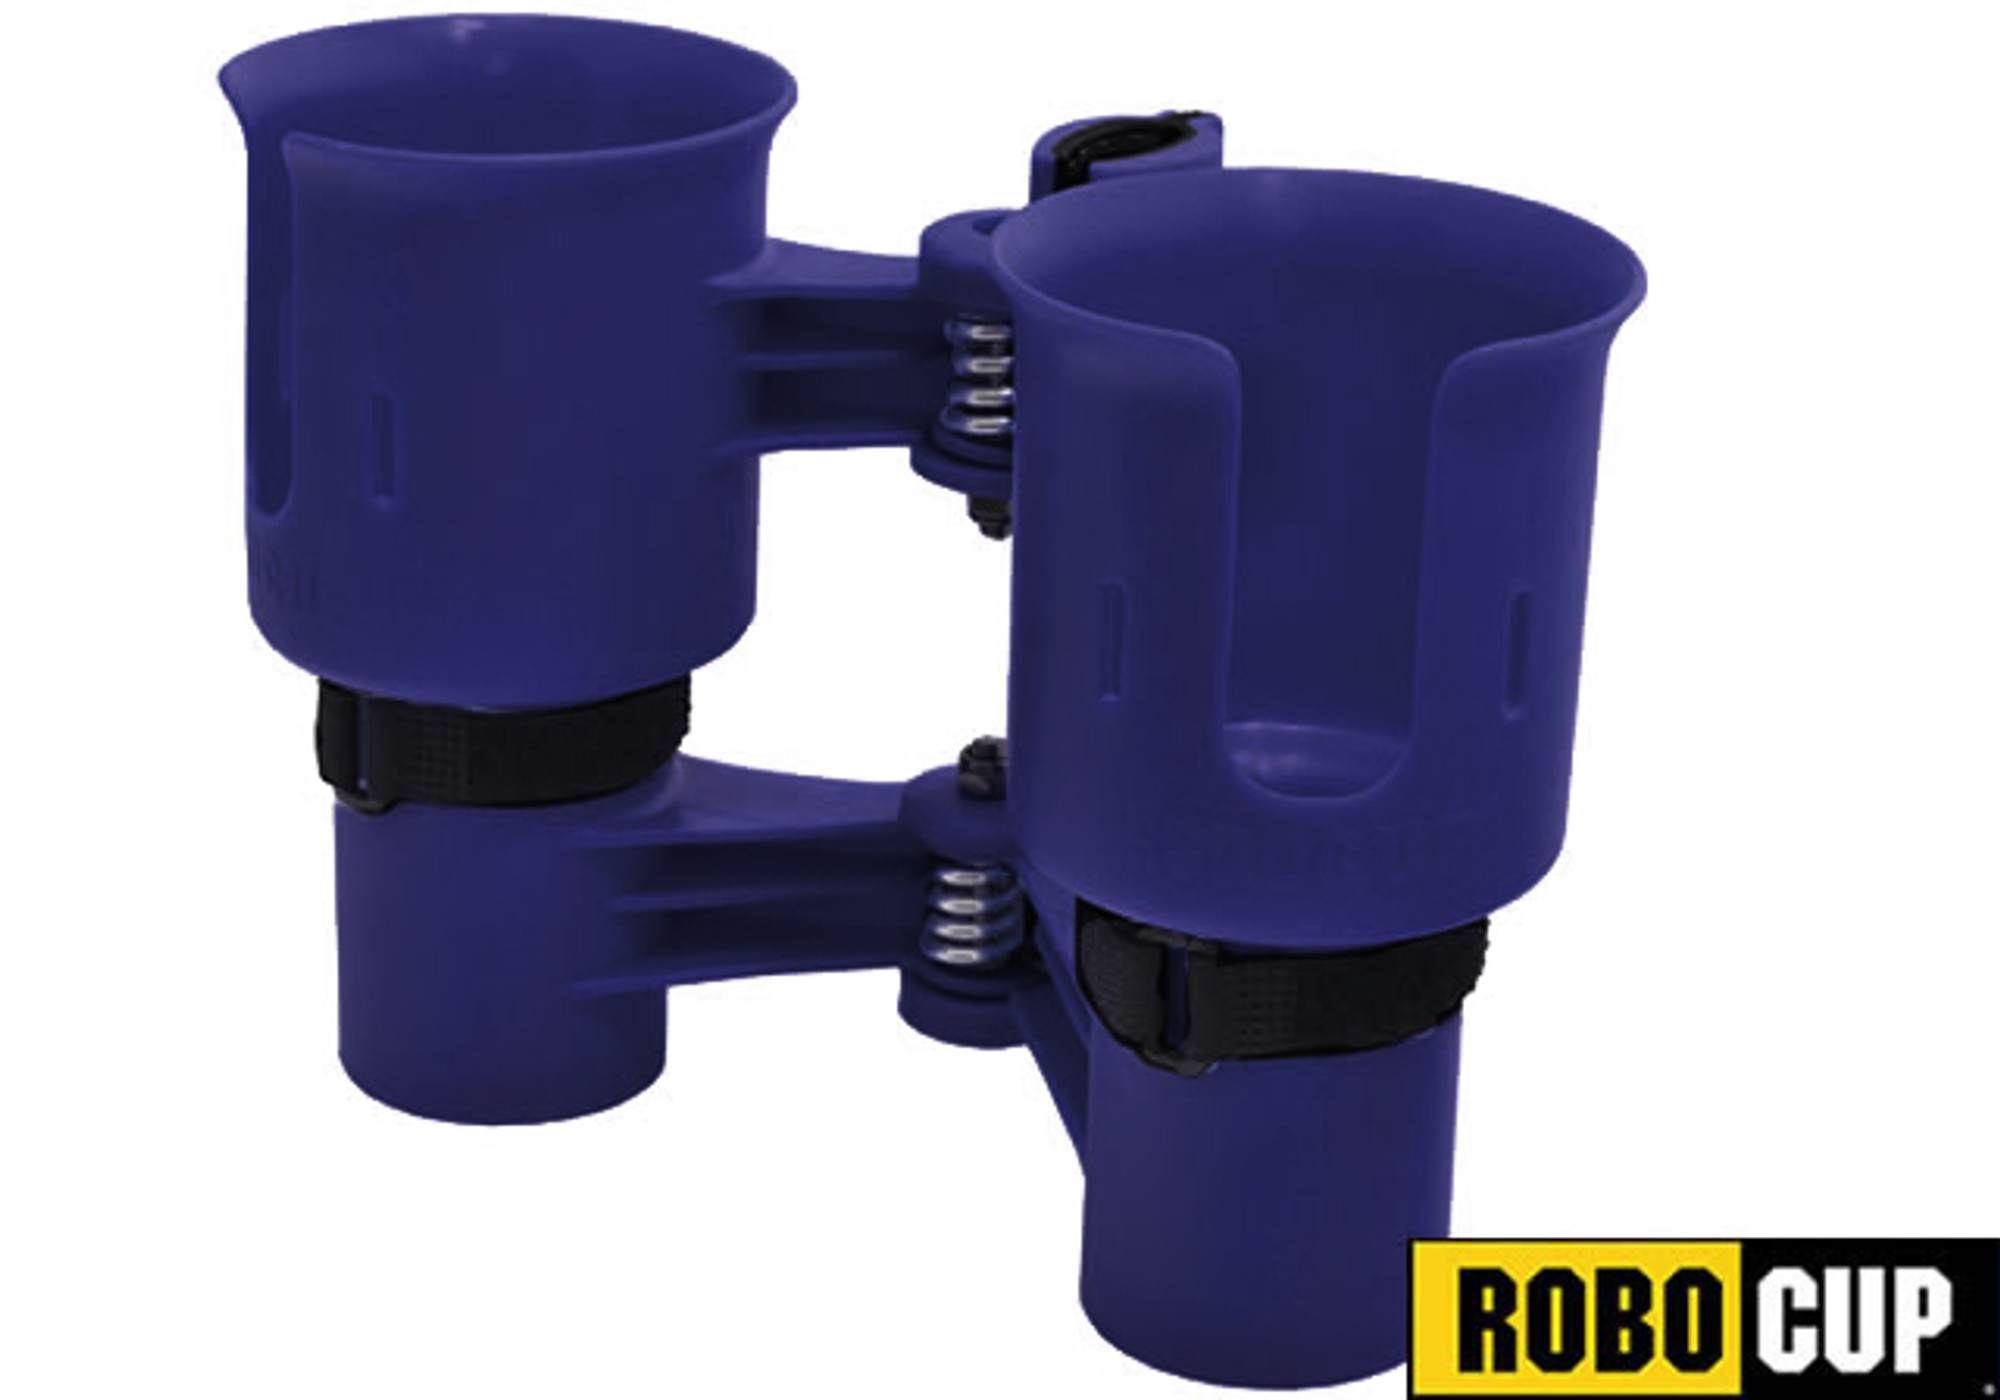 The RoboCup Portable Beverage Caddy (Color: Navy)